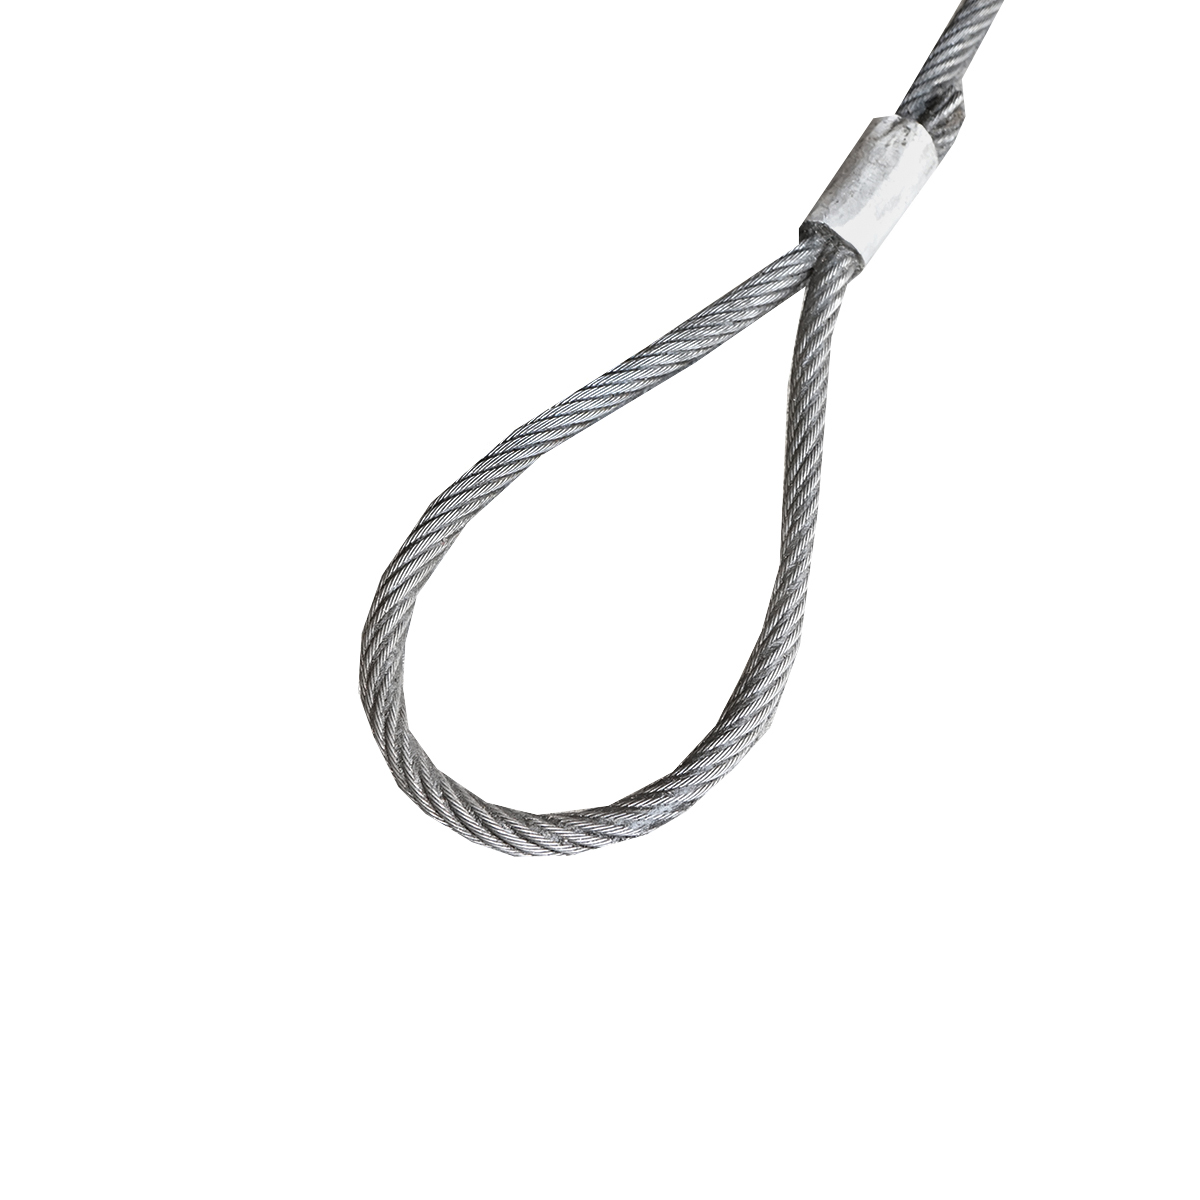 Cablu/sufa troliu din otel cu grosime de 14mm si lungime de 5m cu inele pentru tractat sau ridicat\t